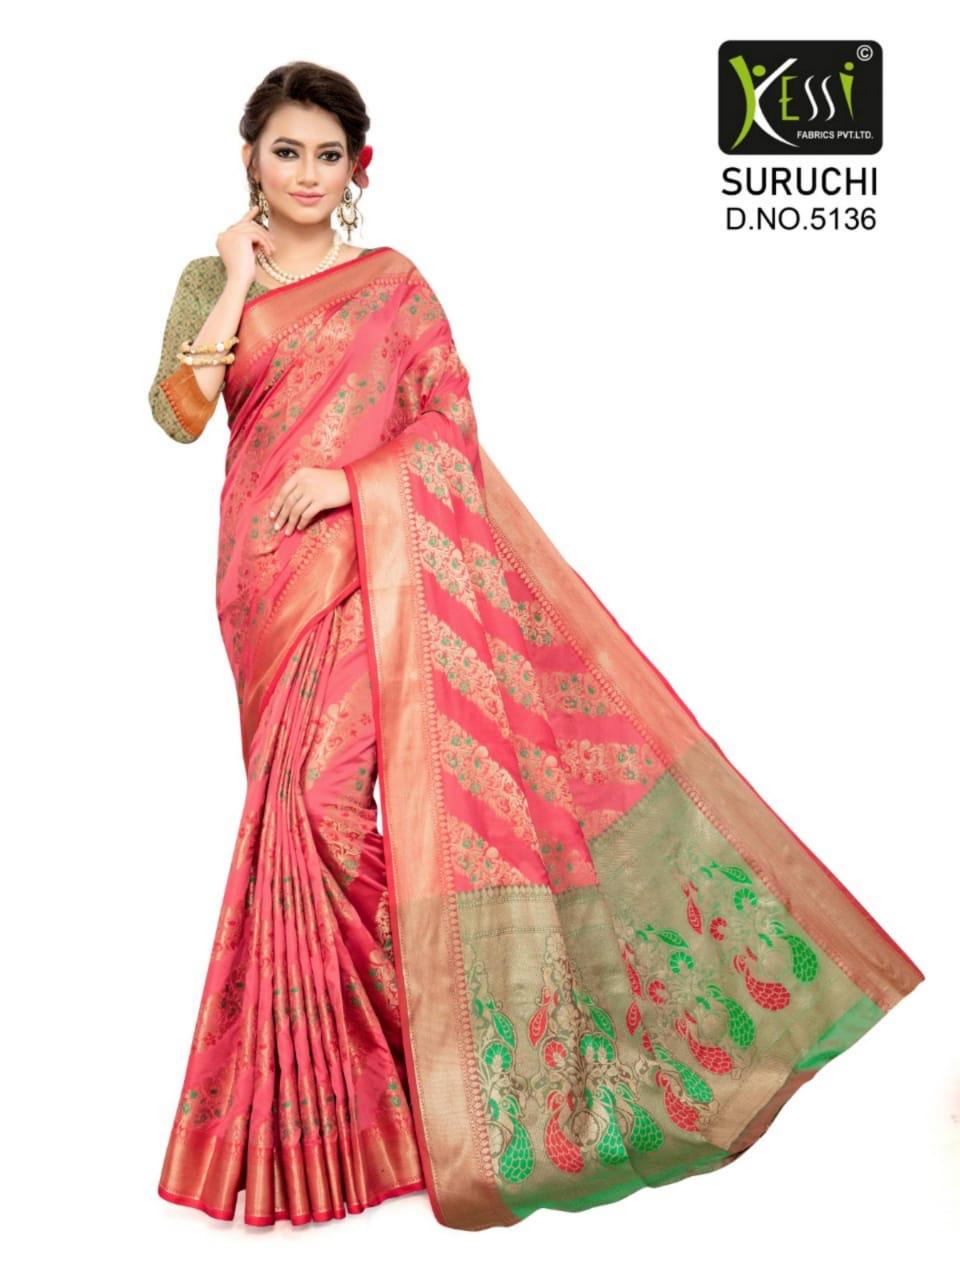 Kessi Suruchi 5131-5136 Series Silk Sarees Catalogue Supplier